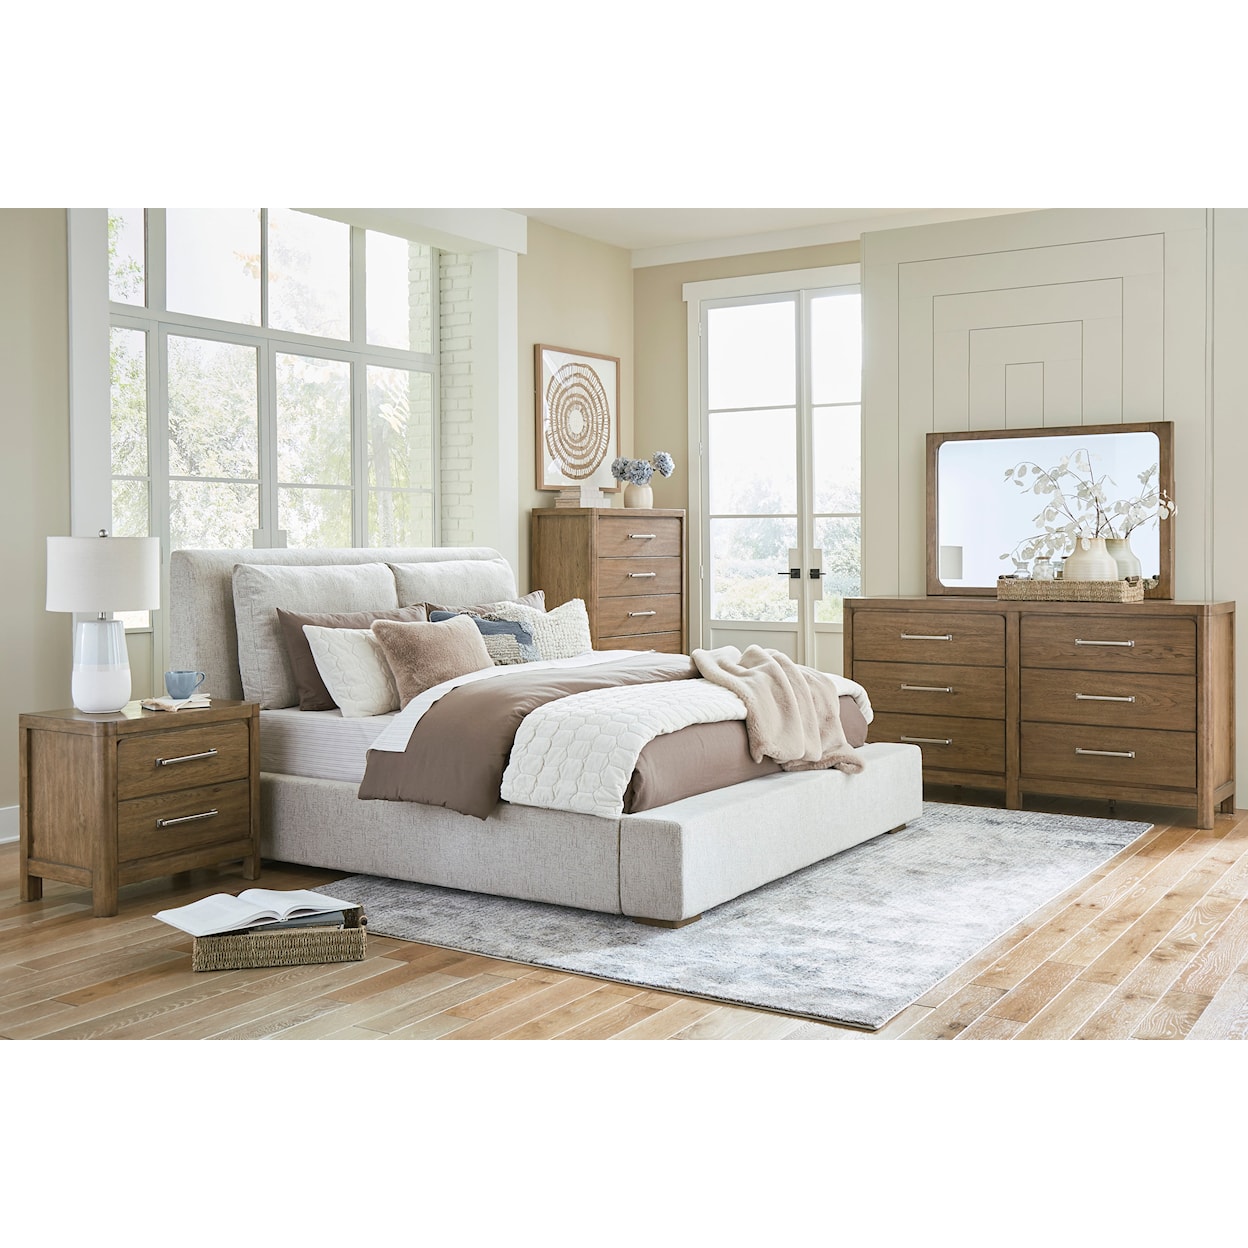 Ashley Furniture Signature Design Cabalynn 5-Piece California King Bedroom Set